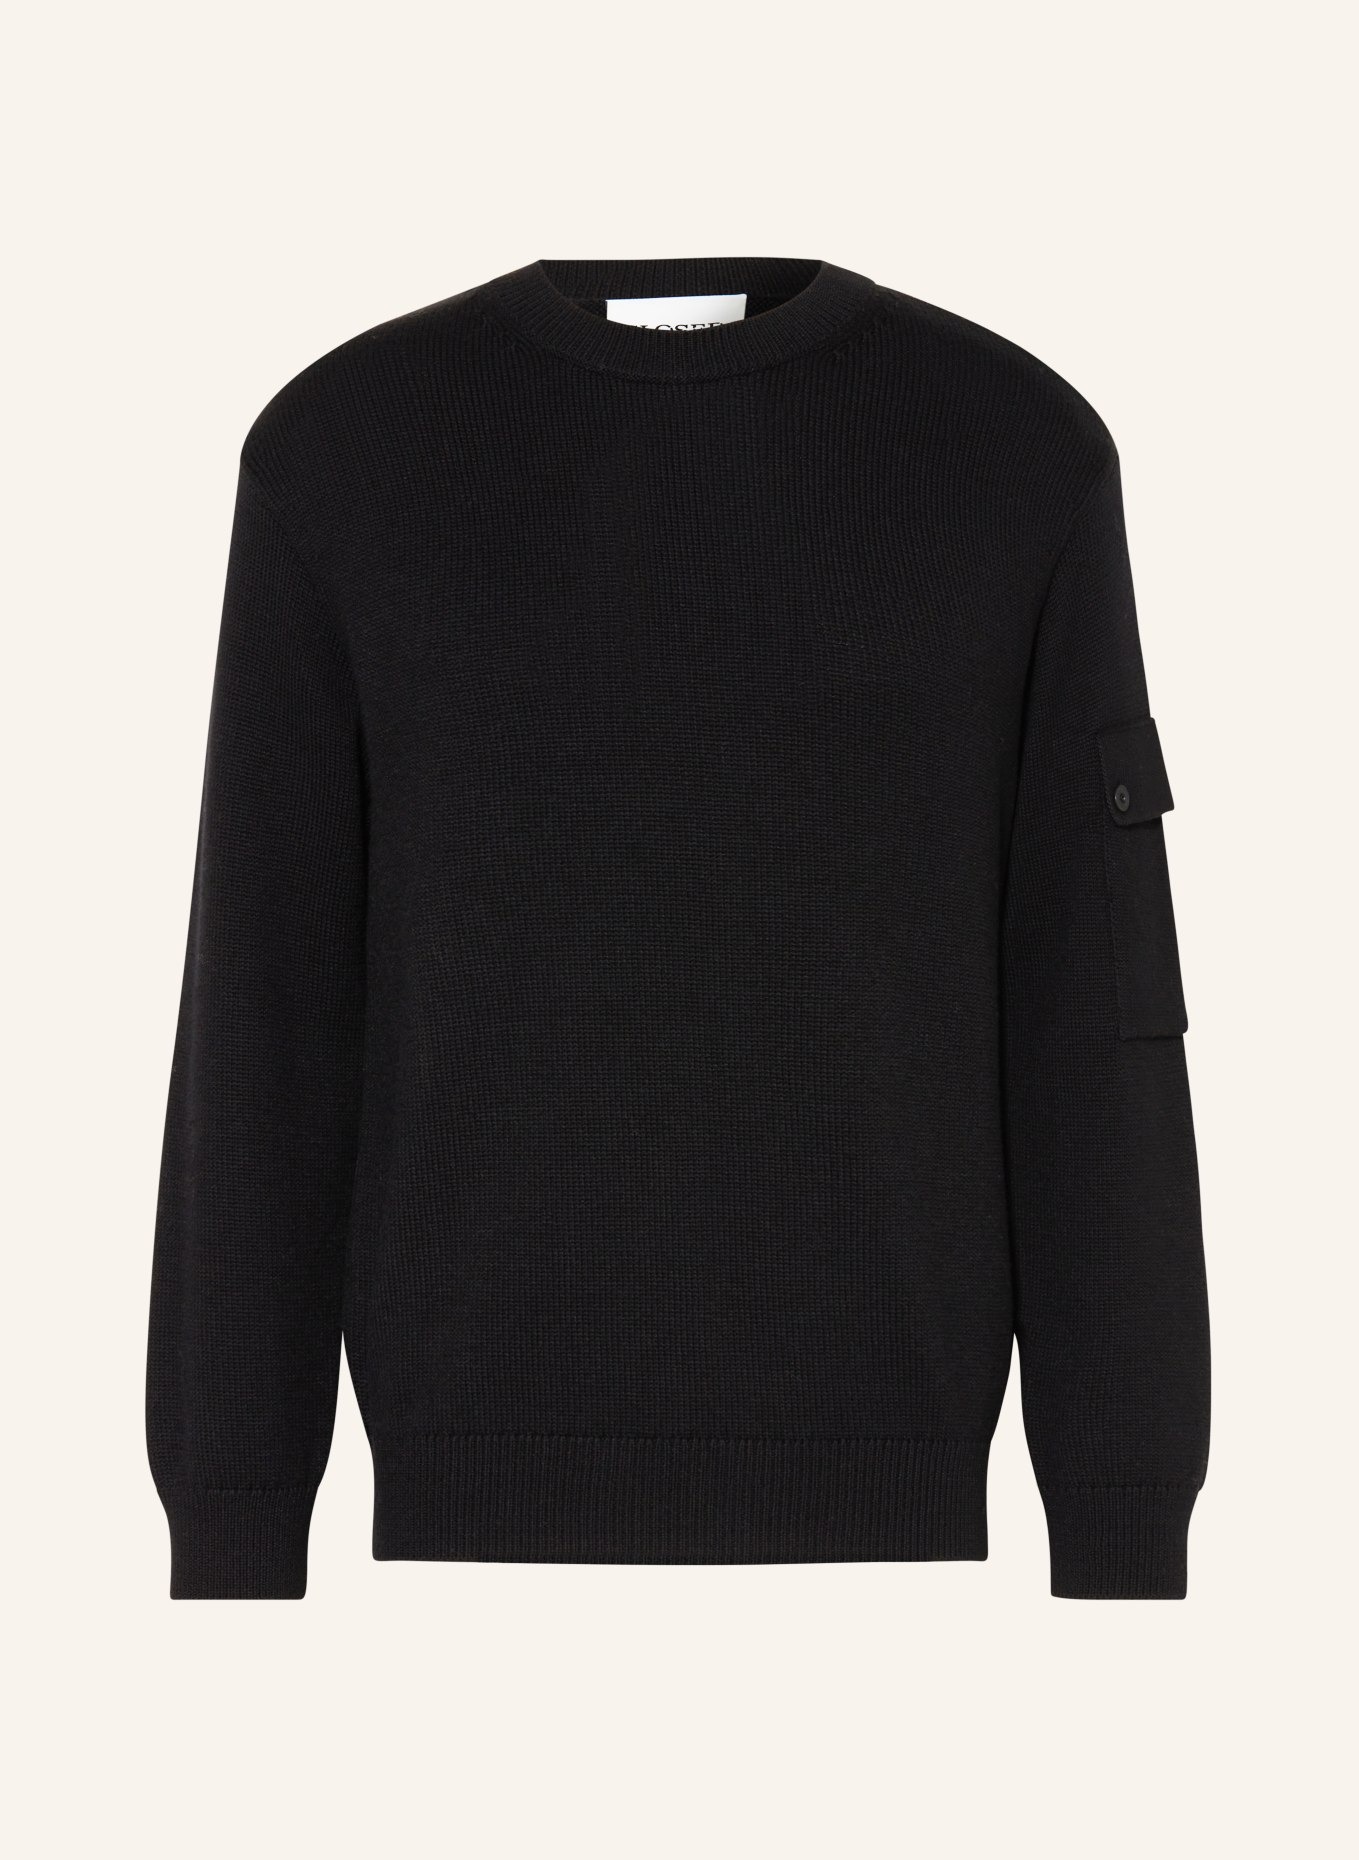 CLOSED Sweater, Color: BLACK (Image 1)